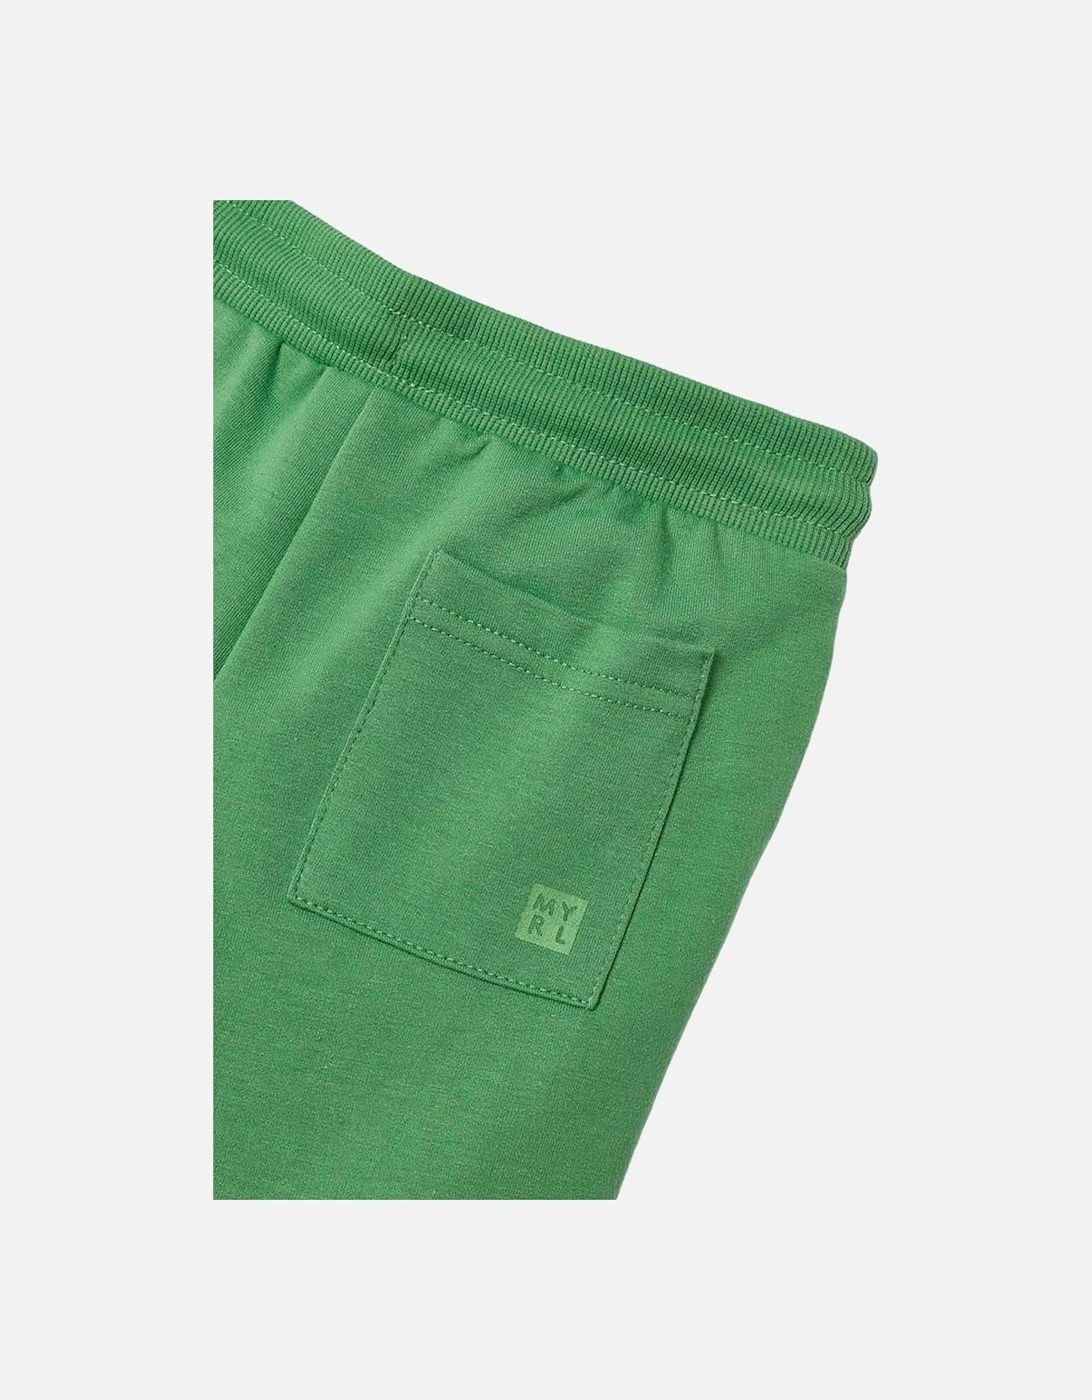 Green Jog Shorts